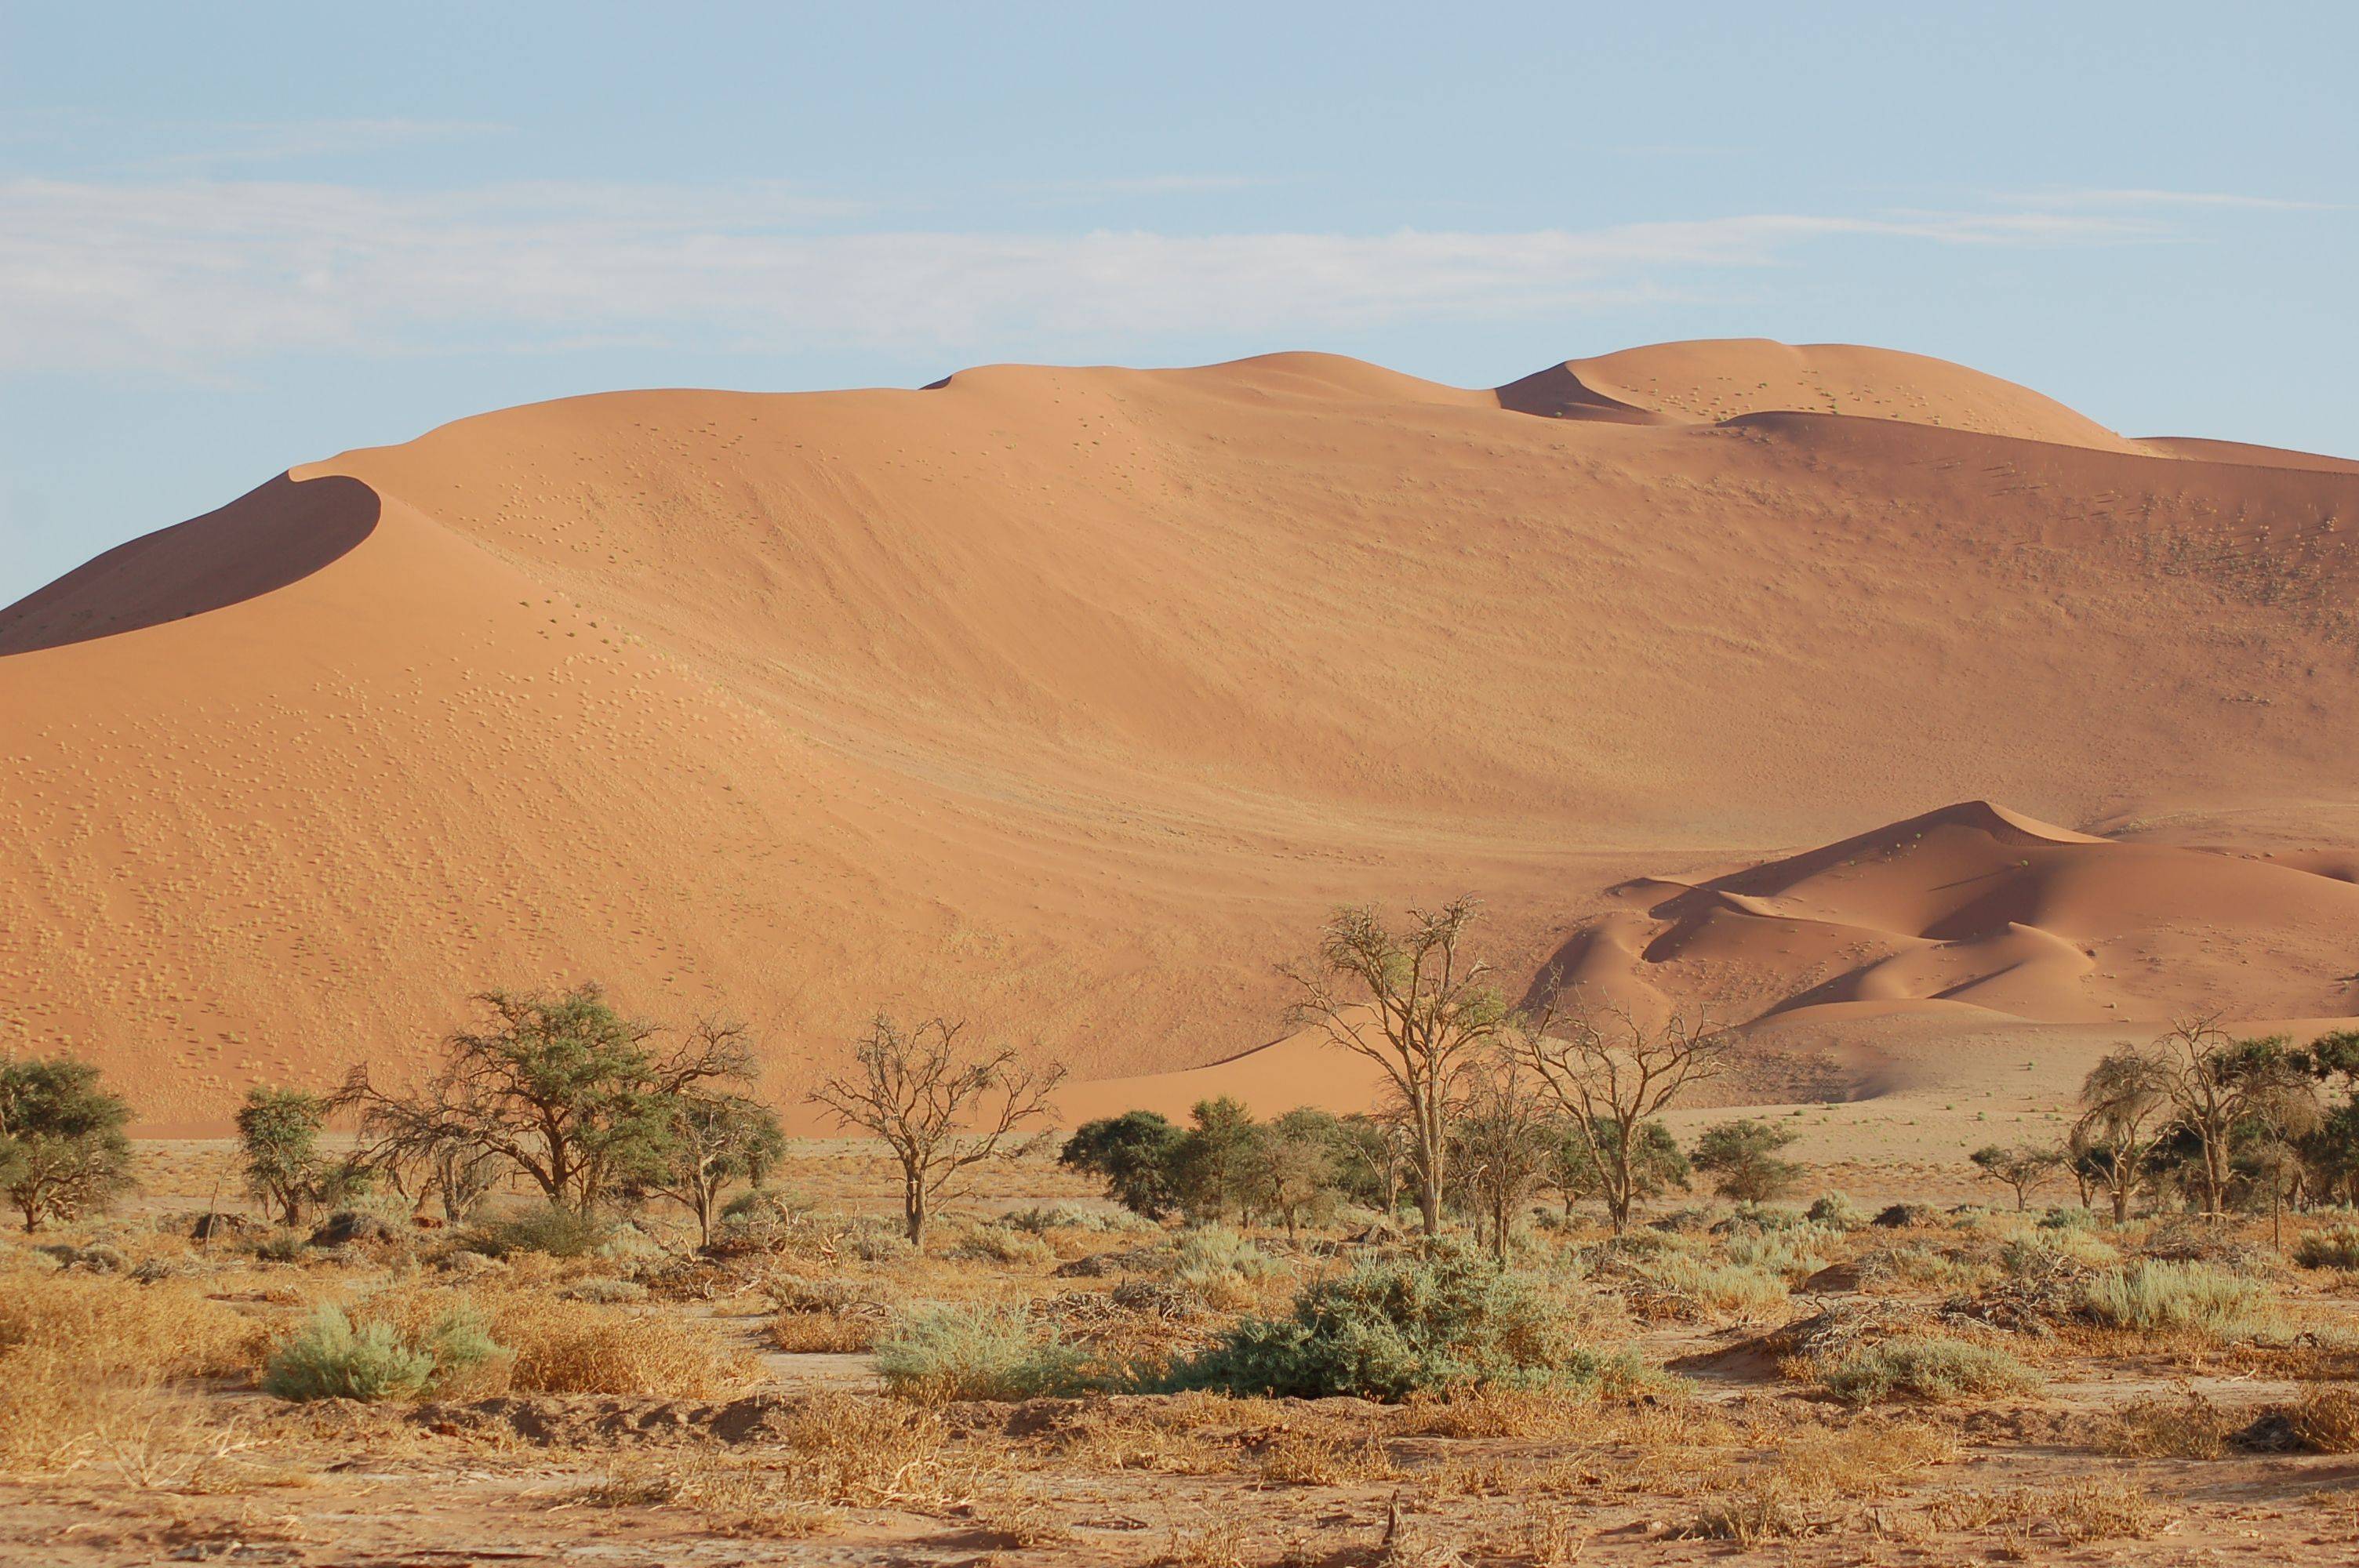 Le dune di Sossusvlei